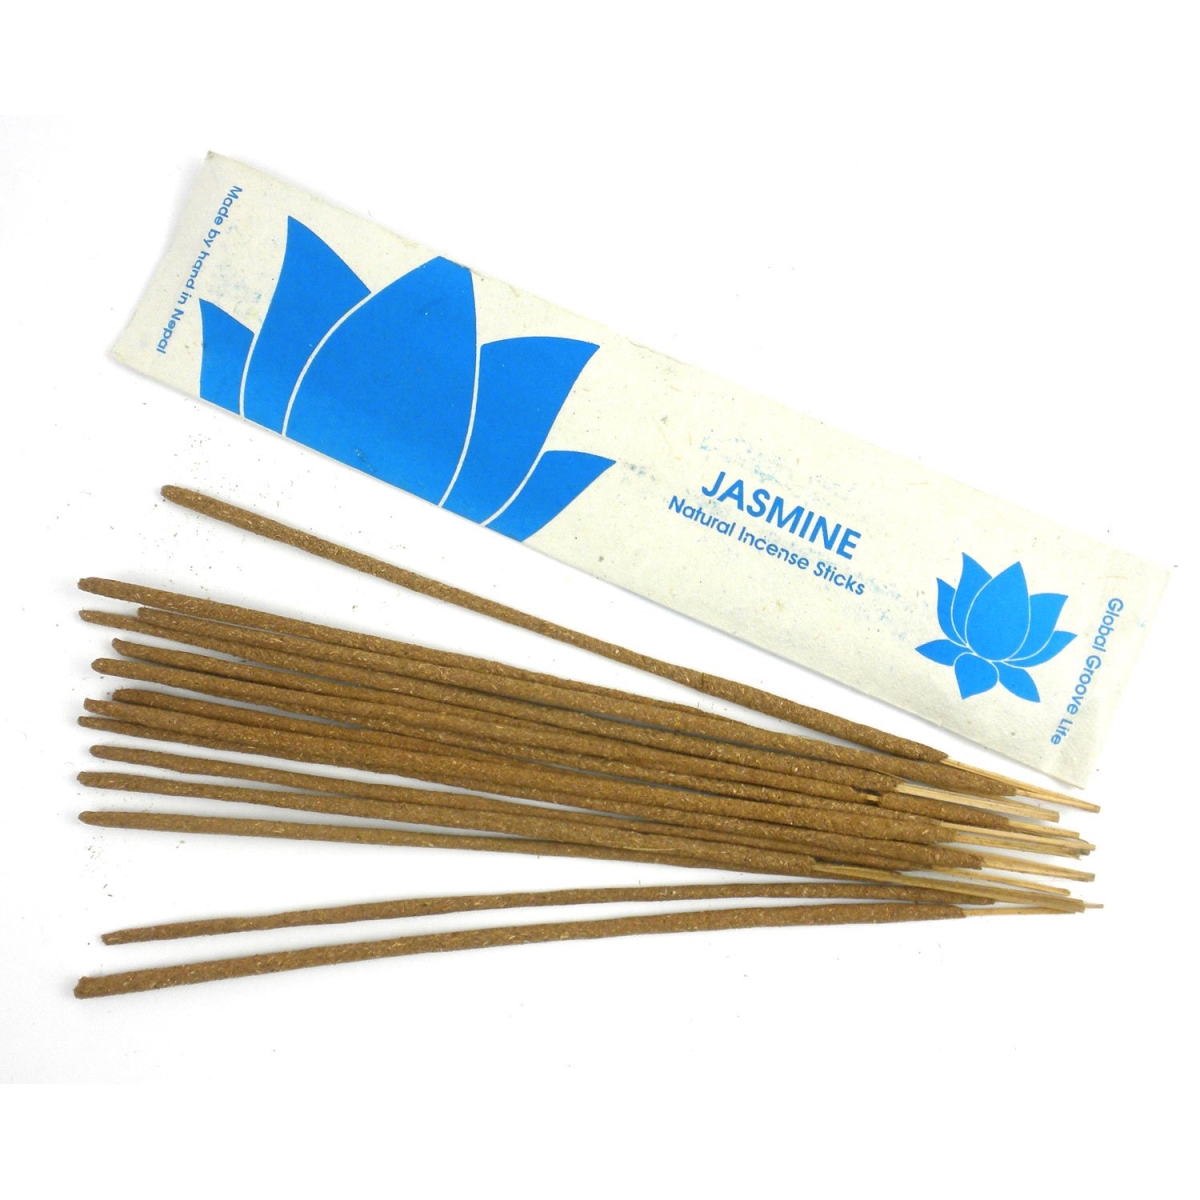 Glg21211-12-597669 Handmade & Fair Trade Stick Incense, Jasmine